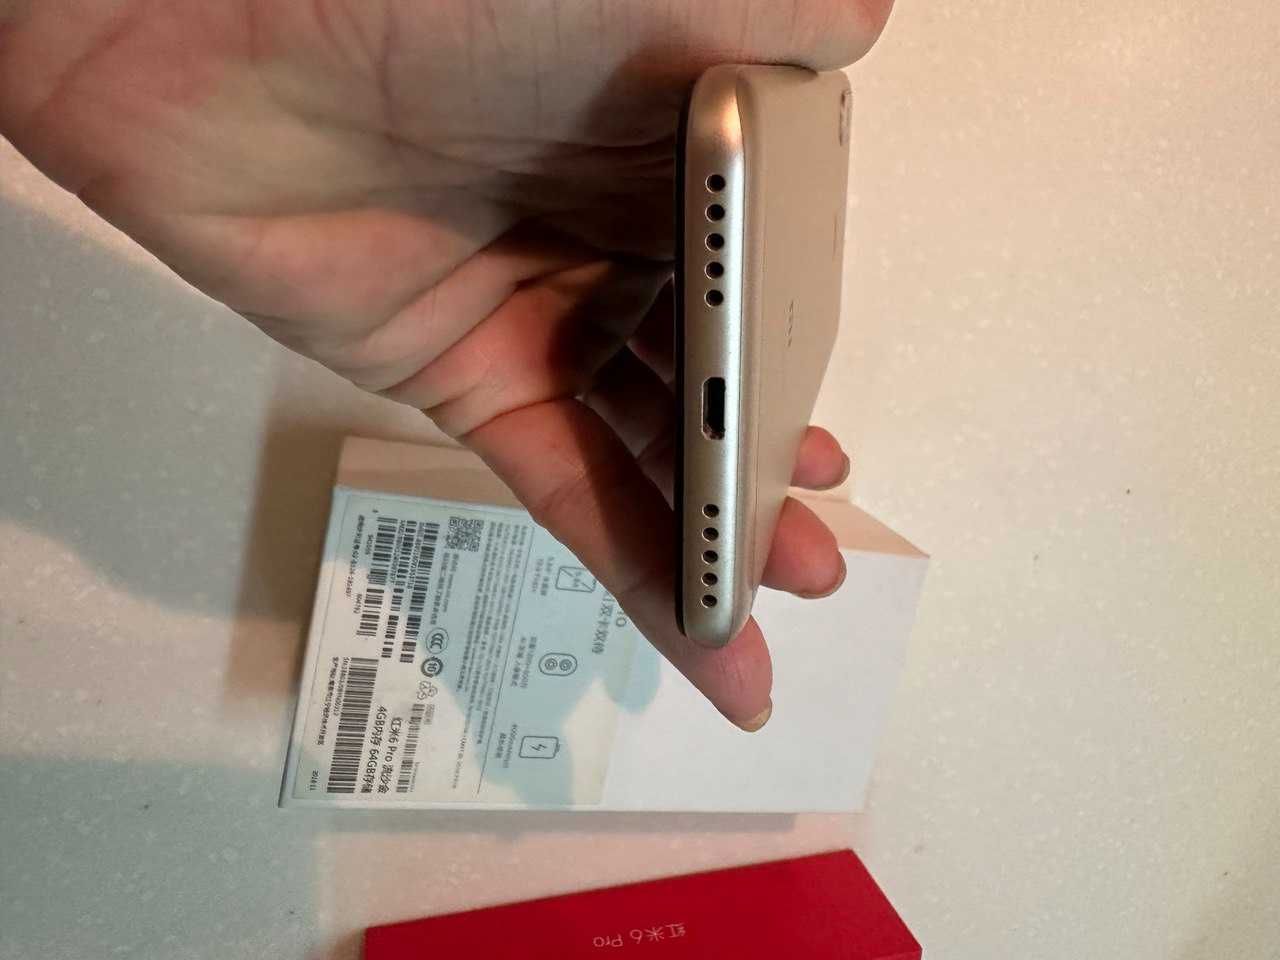 Xiaomi Redmi 6 pro, 64Gb, поддерживает 2а формата связи - GSM и CDMA